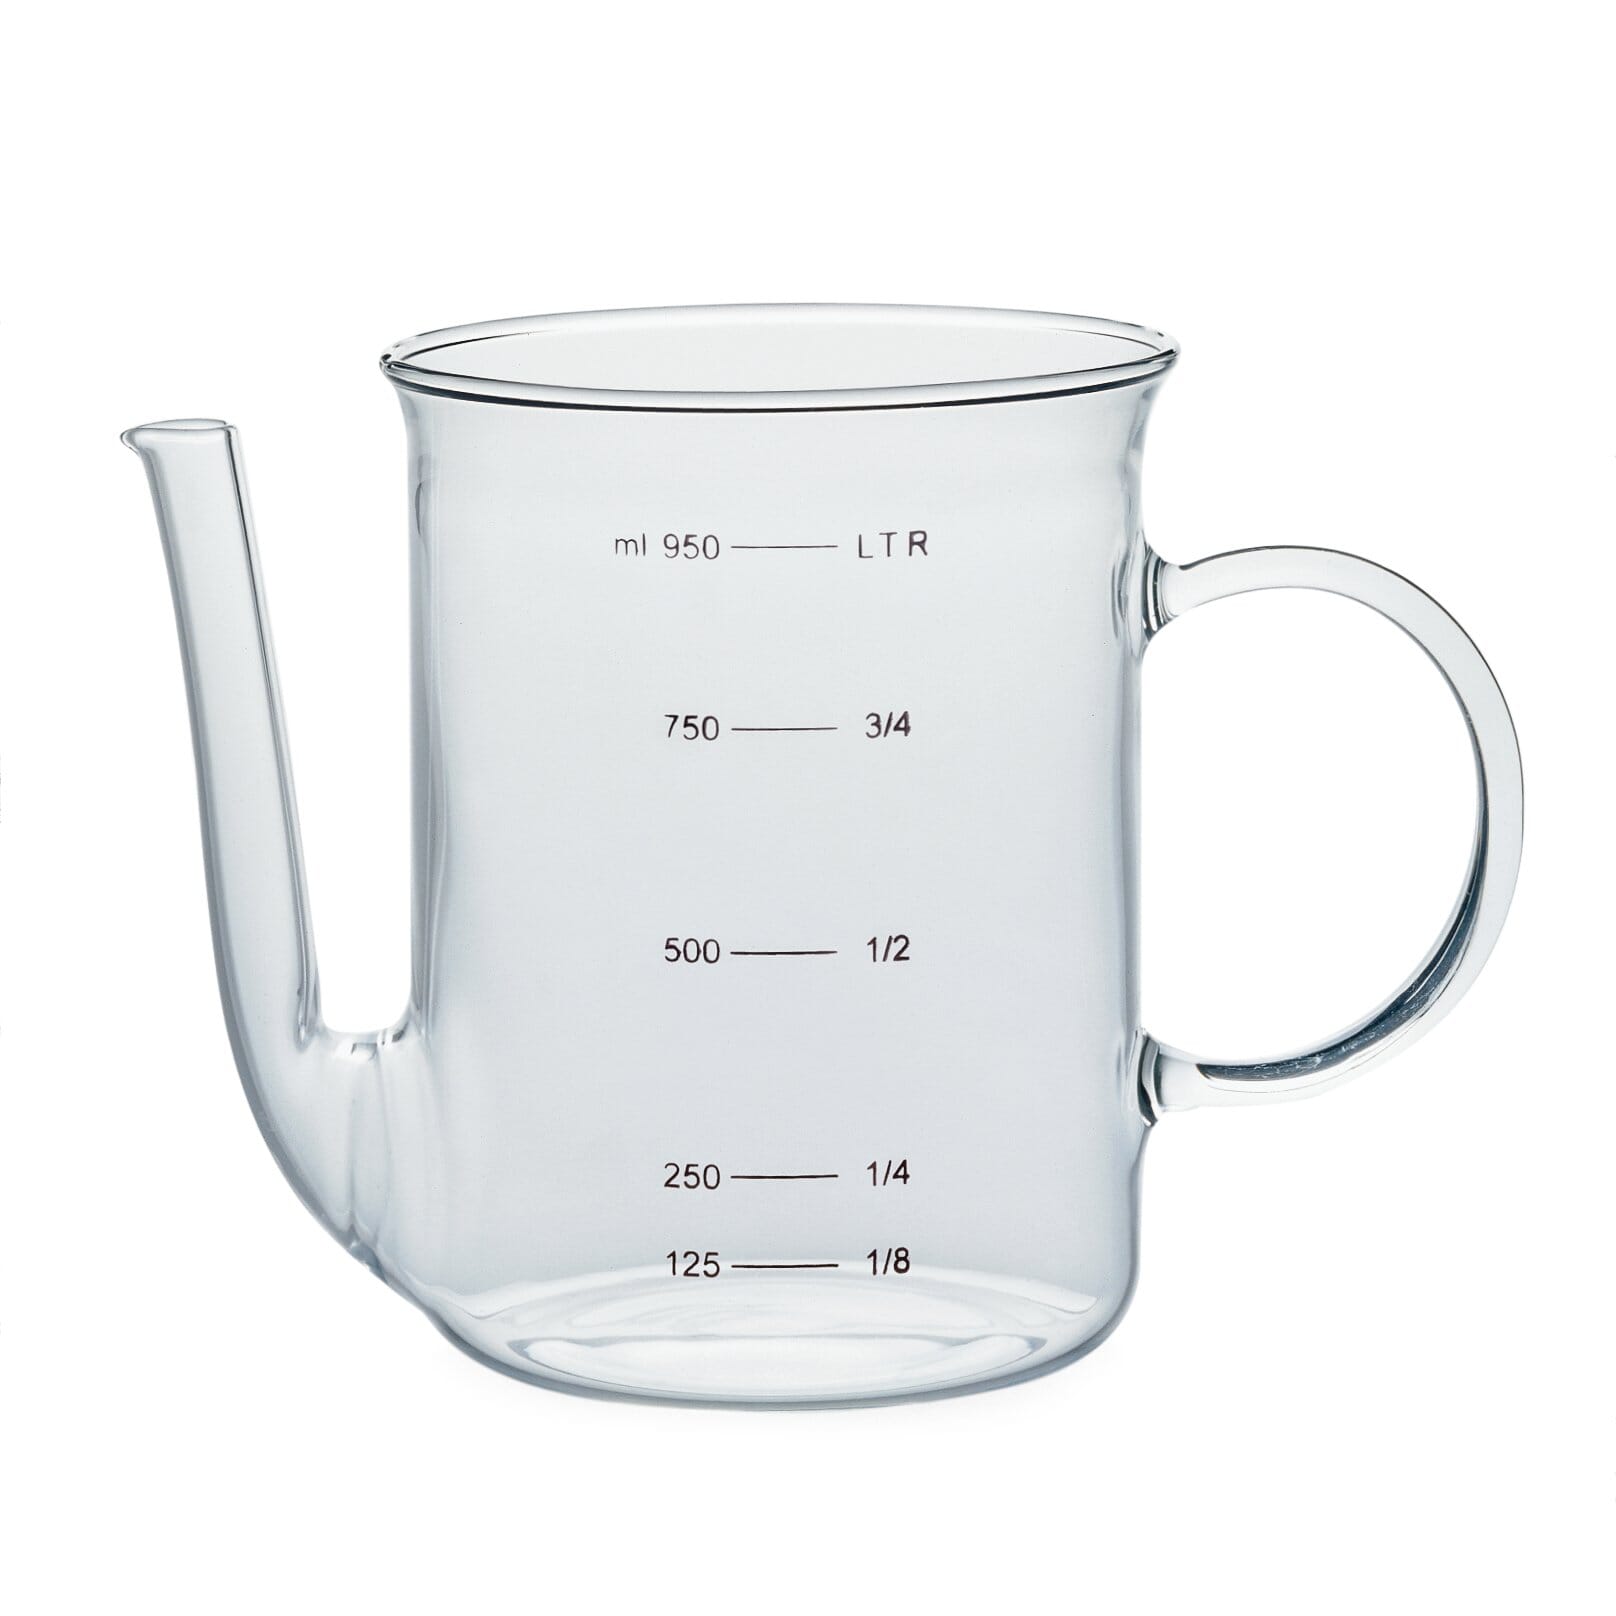 https://assets.manufactum.de/p/070/070743/70743_01.jpg/fat-lean-measuring-cup-borosilicate-glass.jpg